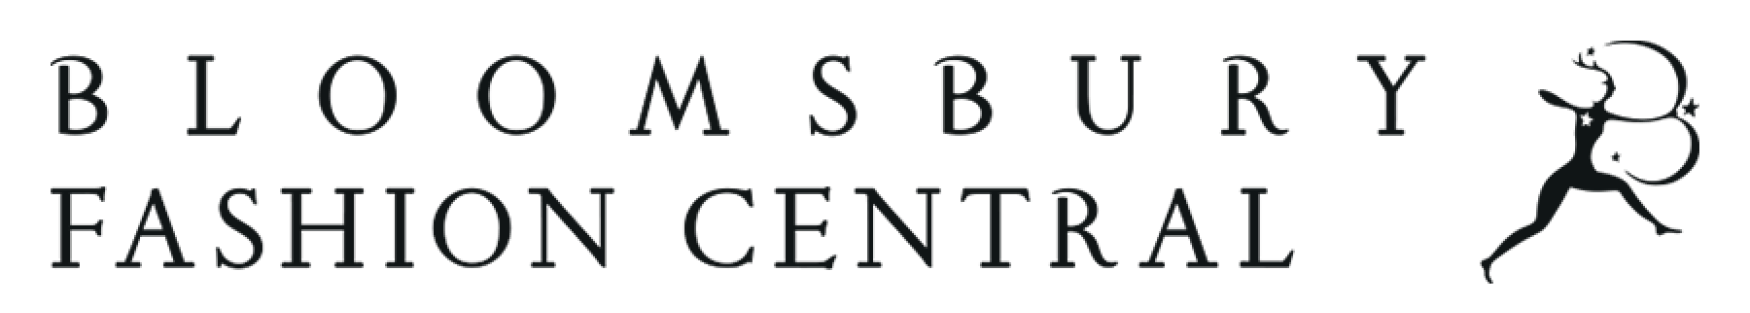 logo bloomsbury fashion central